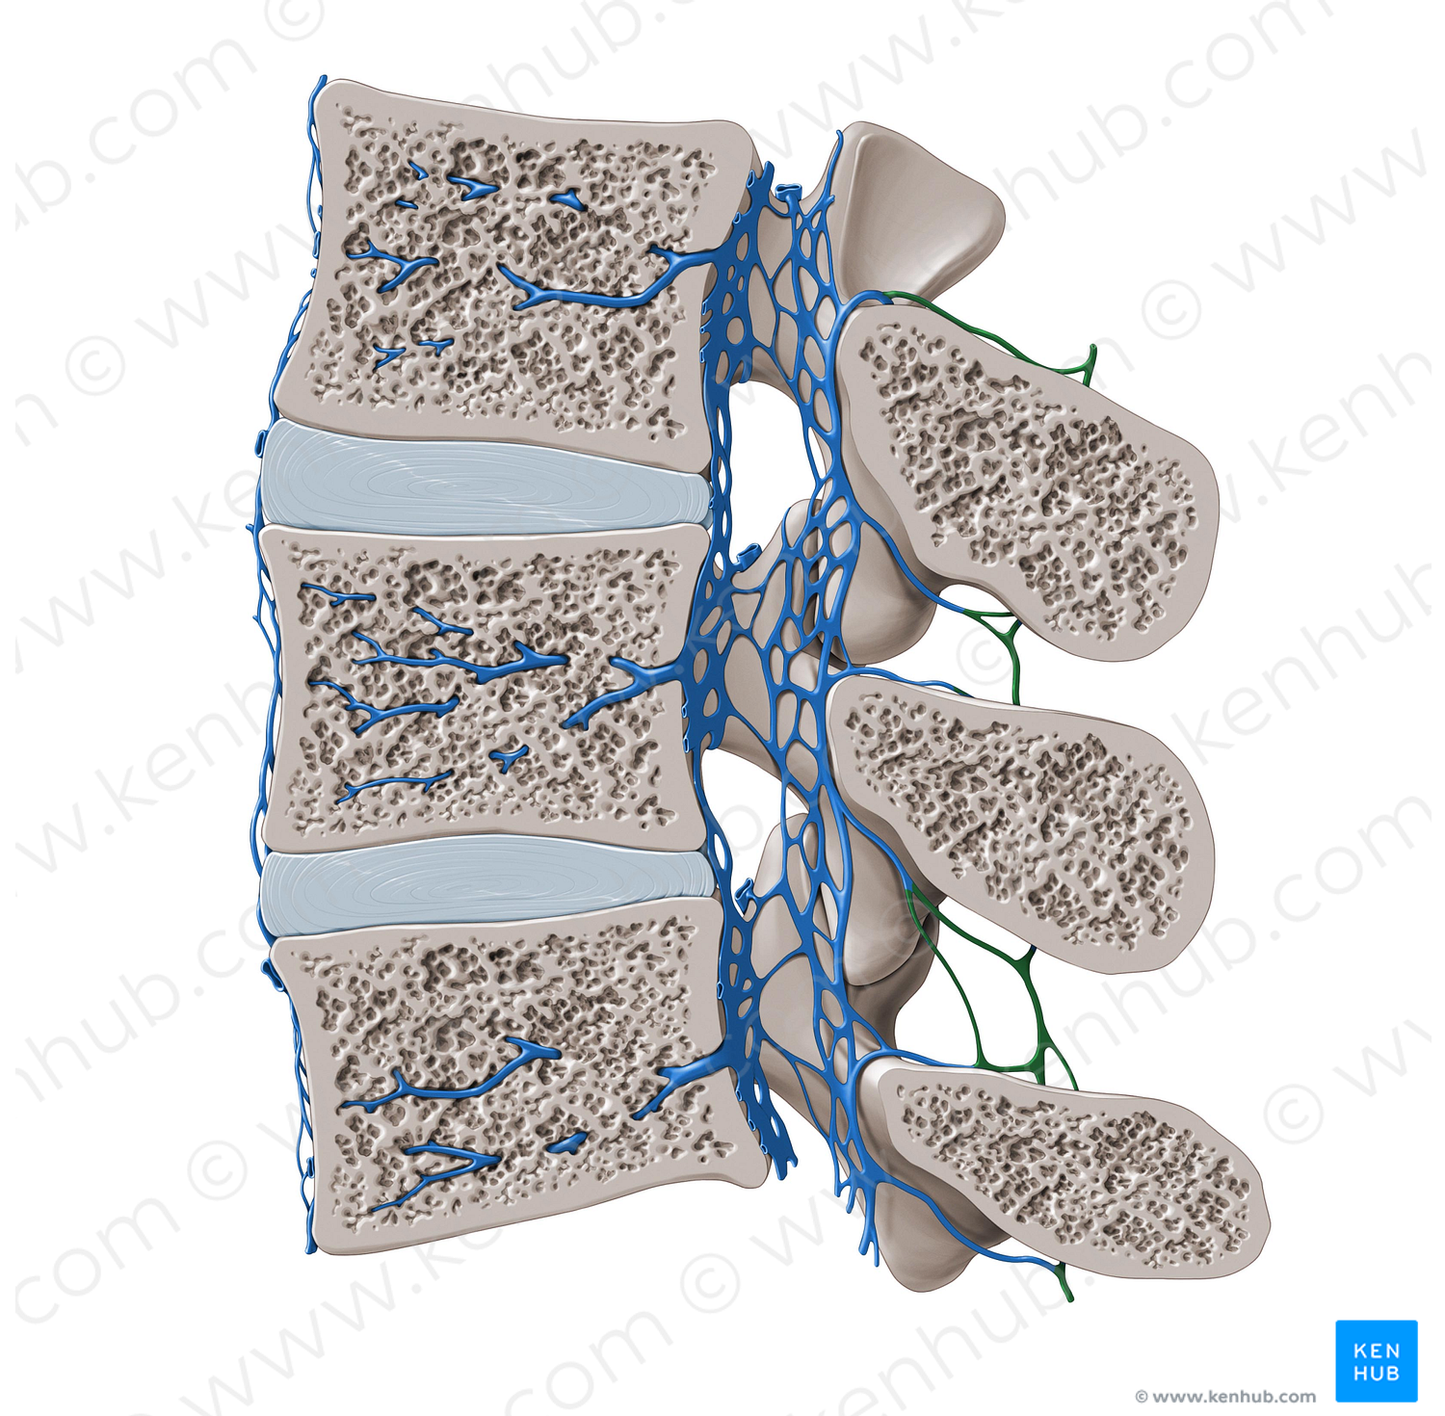 Posterior external vertebral venous plexus (#8080)